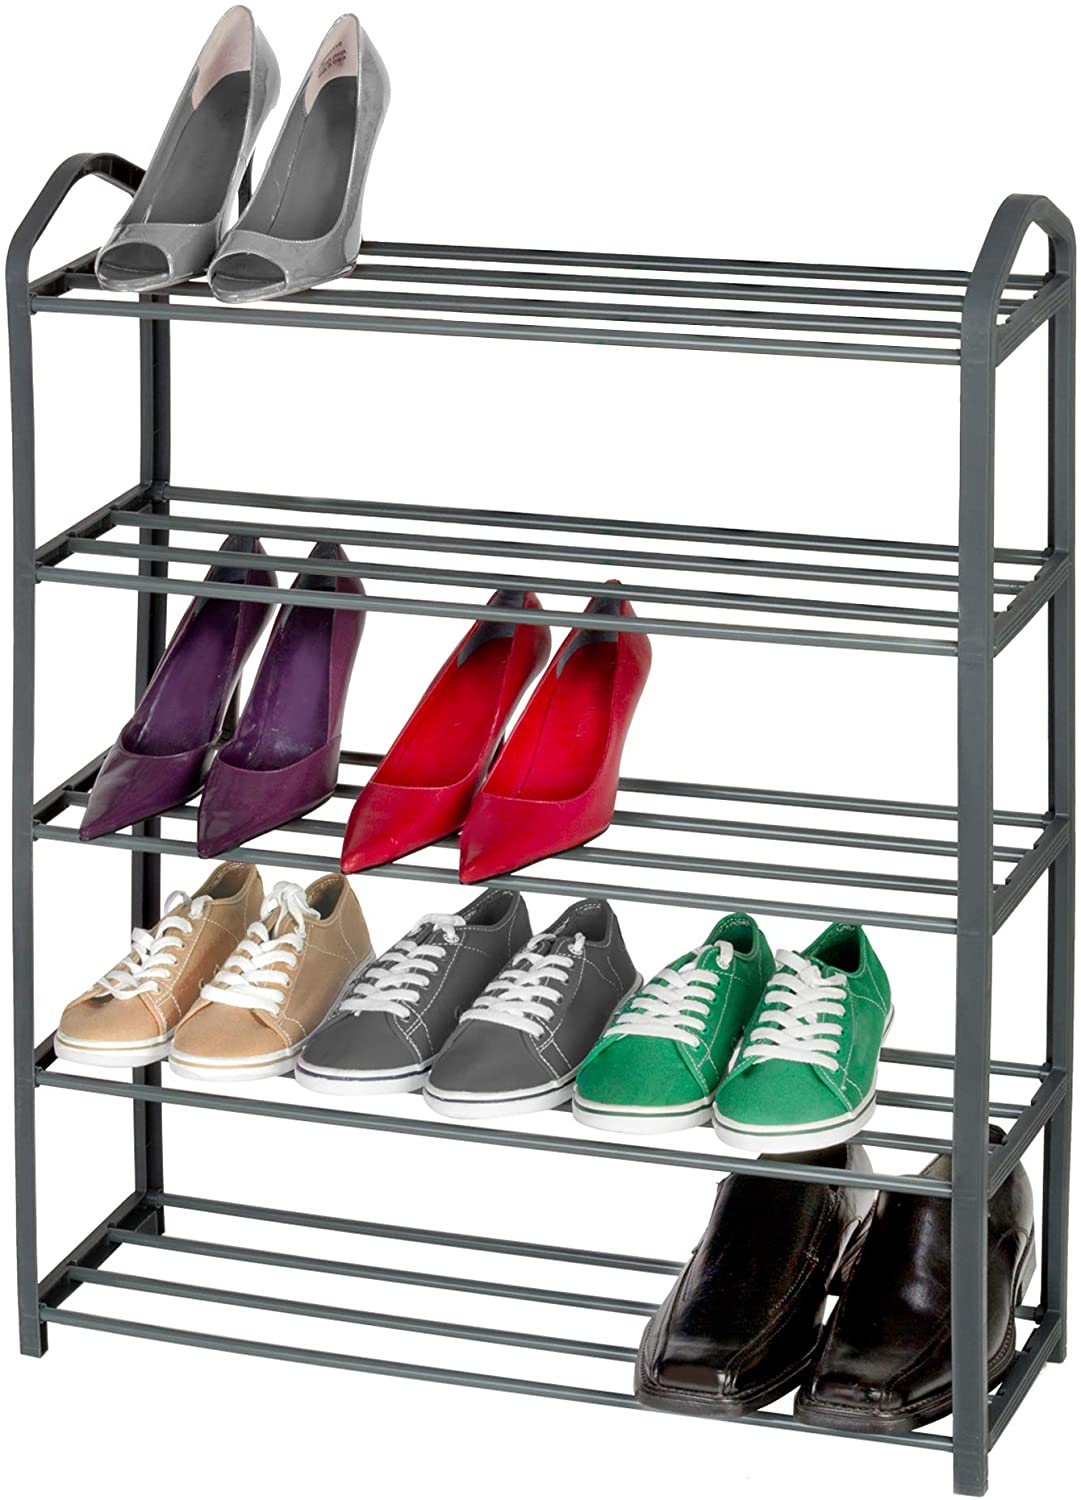 8 Tier Shoe Rack, Narrow Shoe Storage Organizer with 7 Metal Shelves